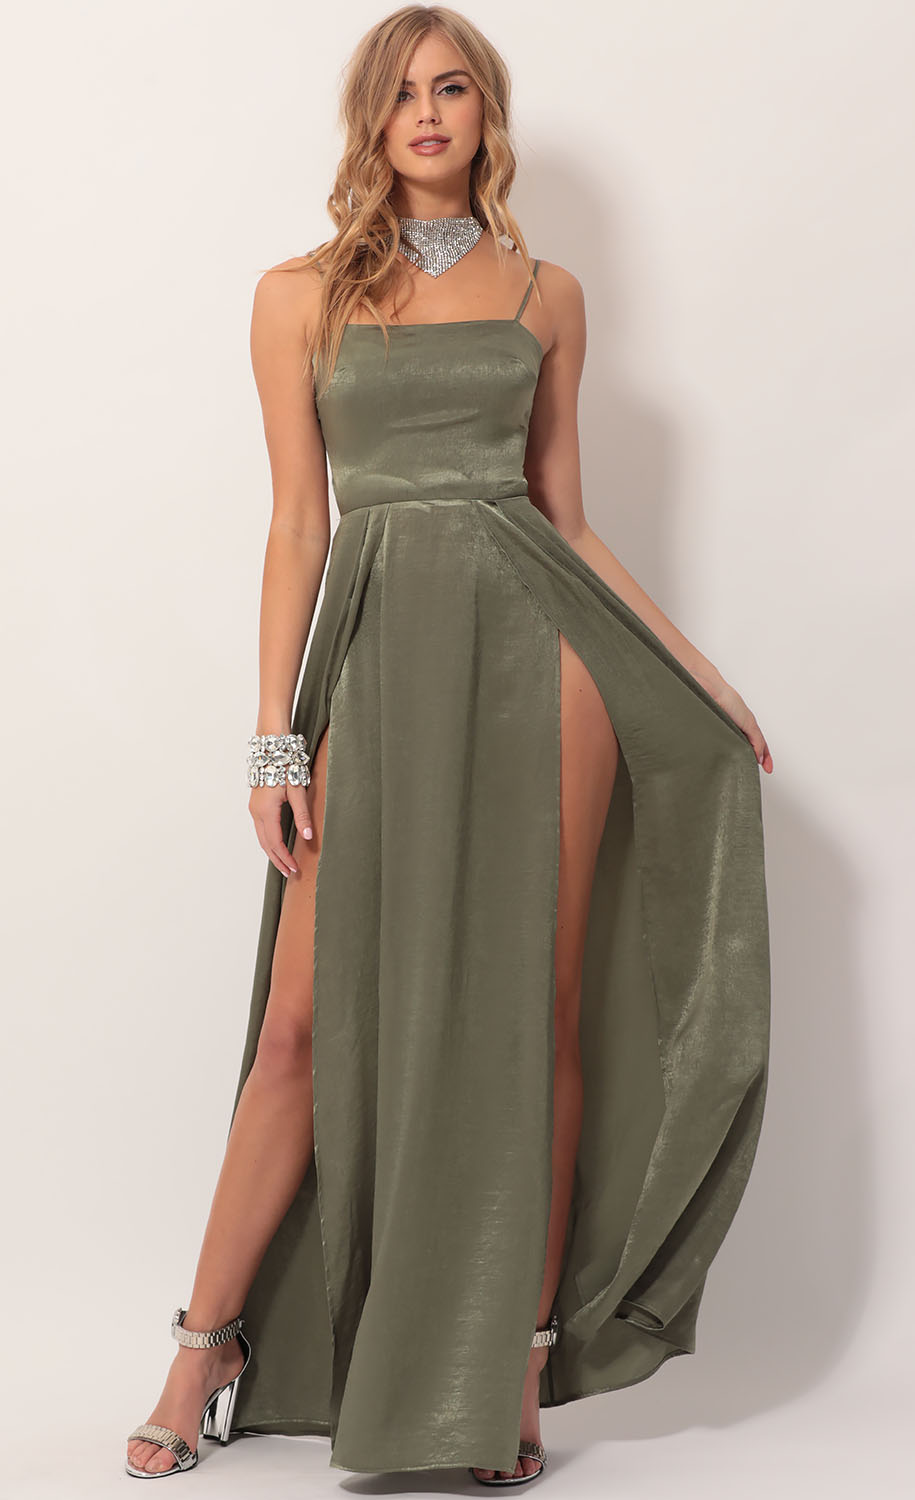 Gala Satin Maxi Dress in Olive Green